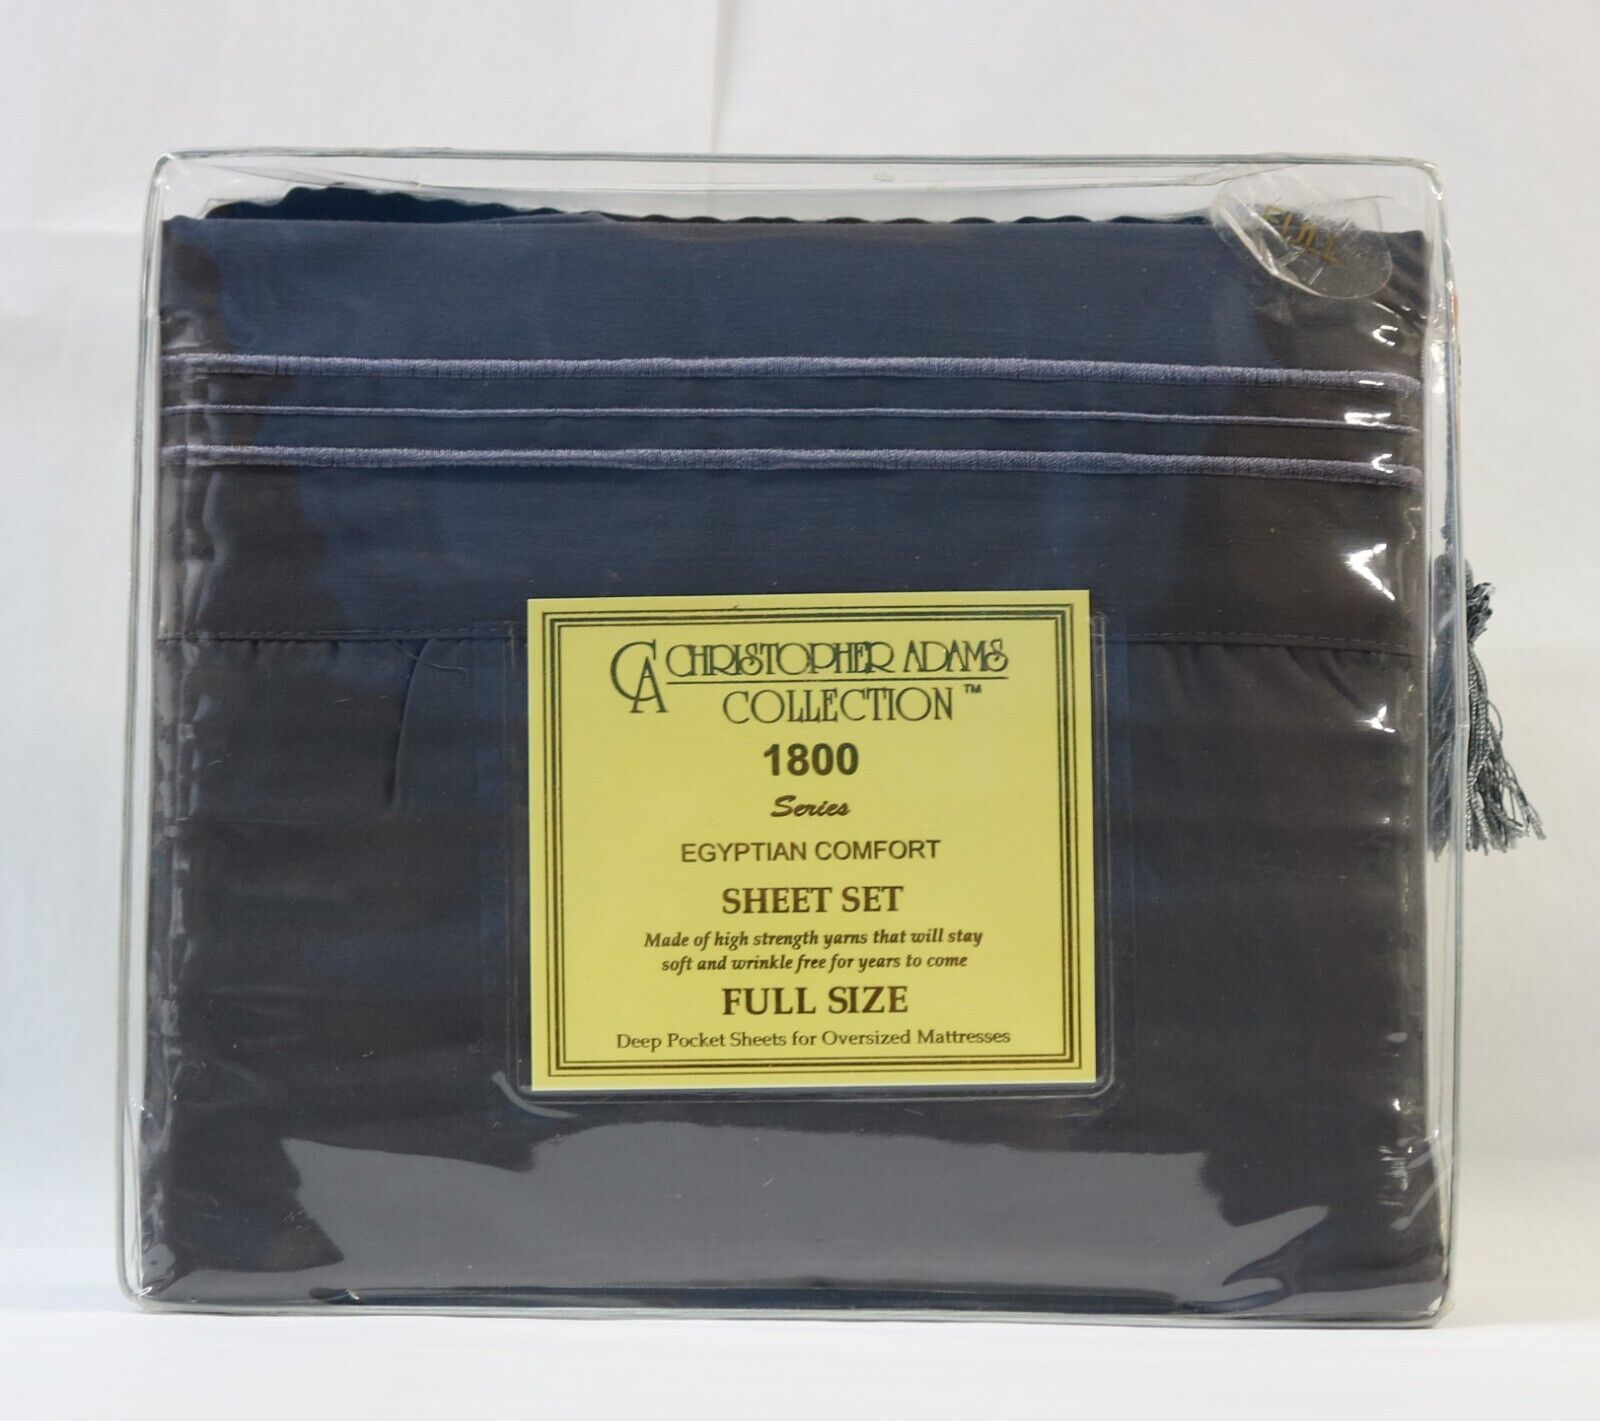 4 Pc Christopher Adams Full Sheet Set Deep Pocket 1800 Series Egyptian Comfort - $24.99